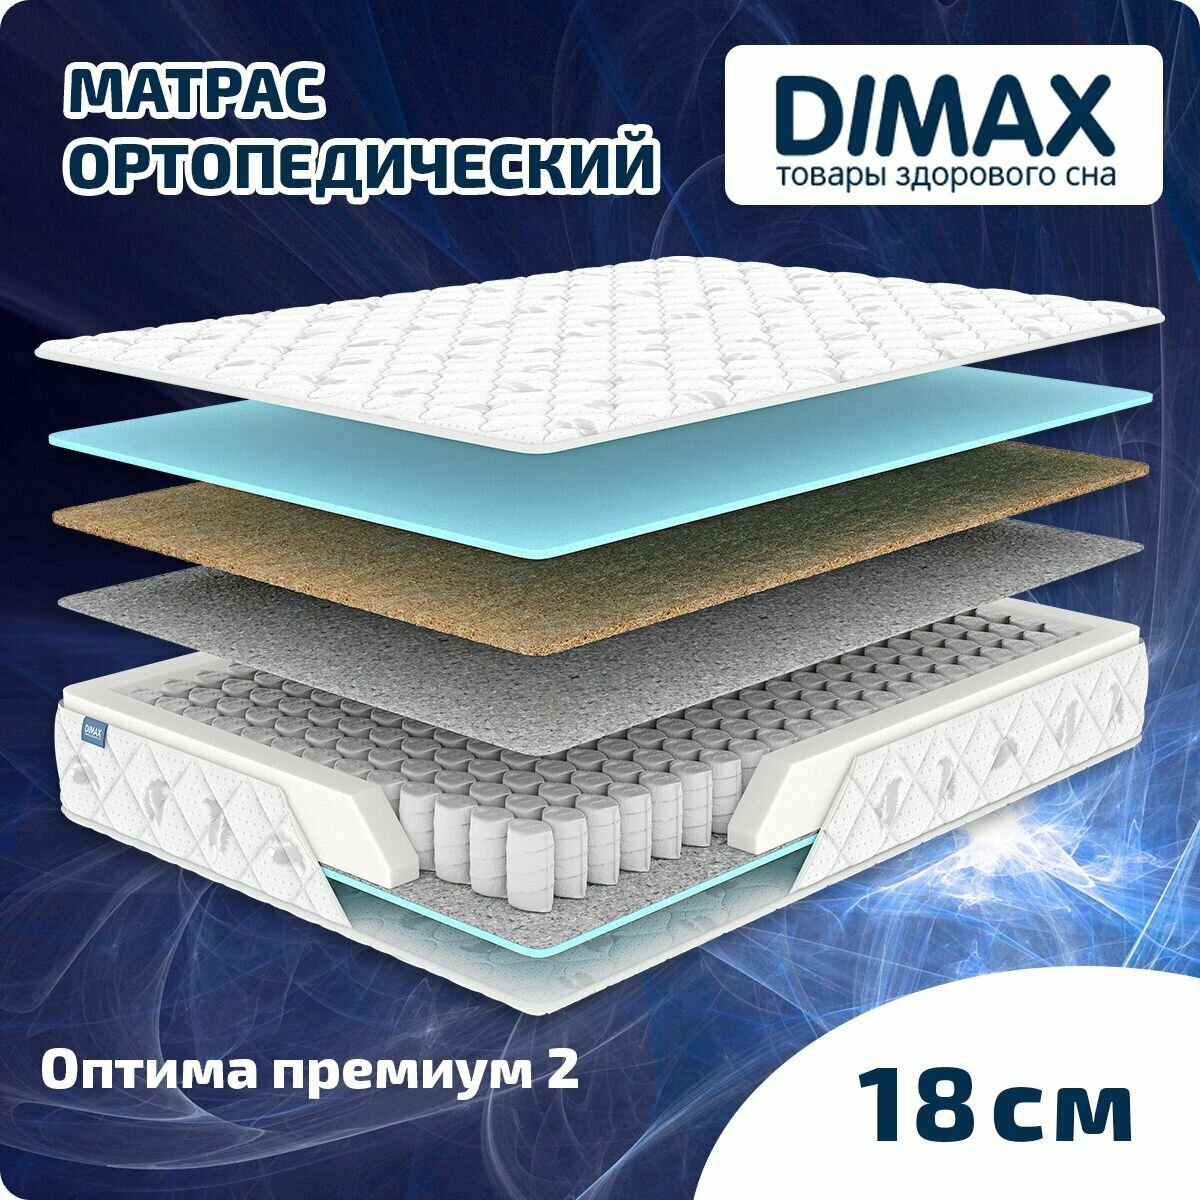  Dimax   2 90x200